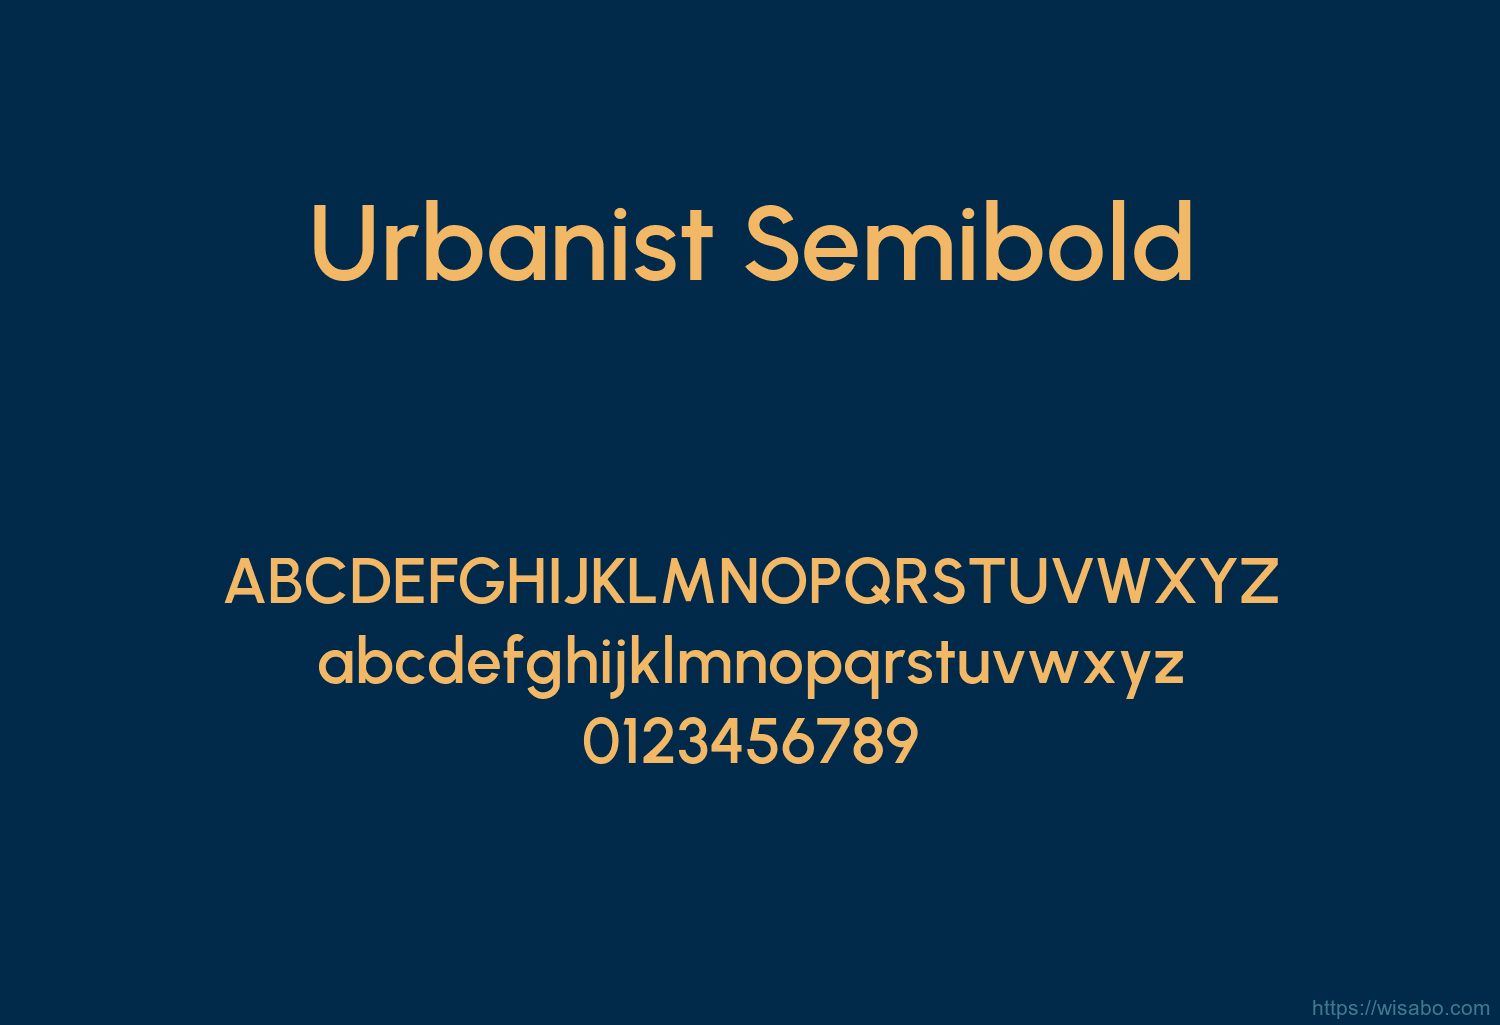 Urbanist Semibold